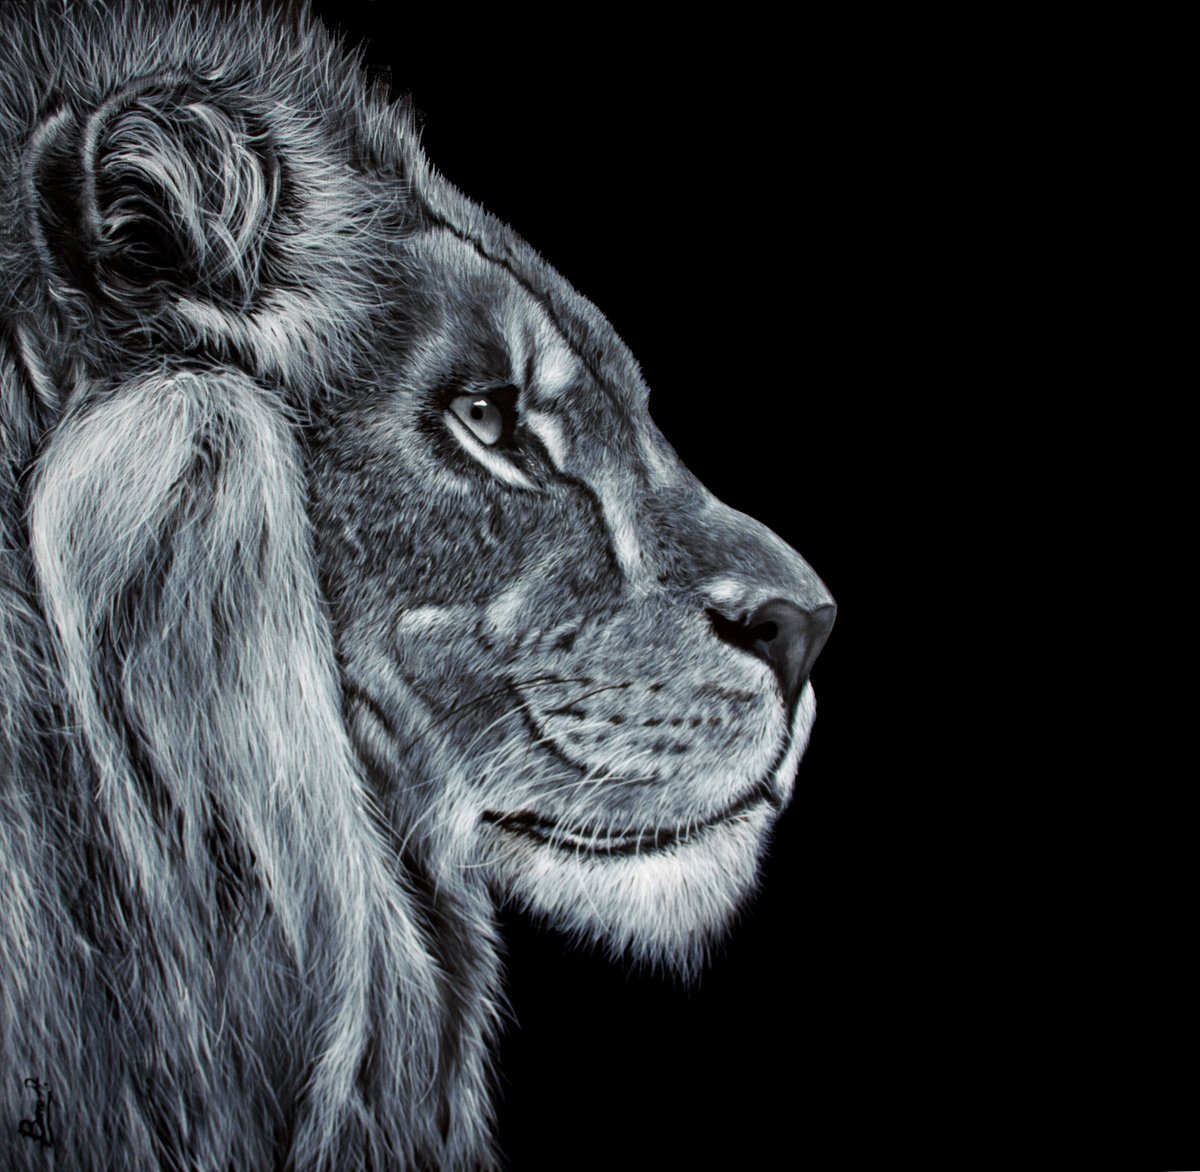 Lion by Burcu Akarcay